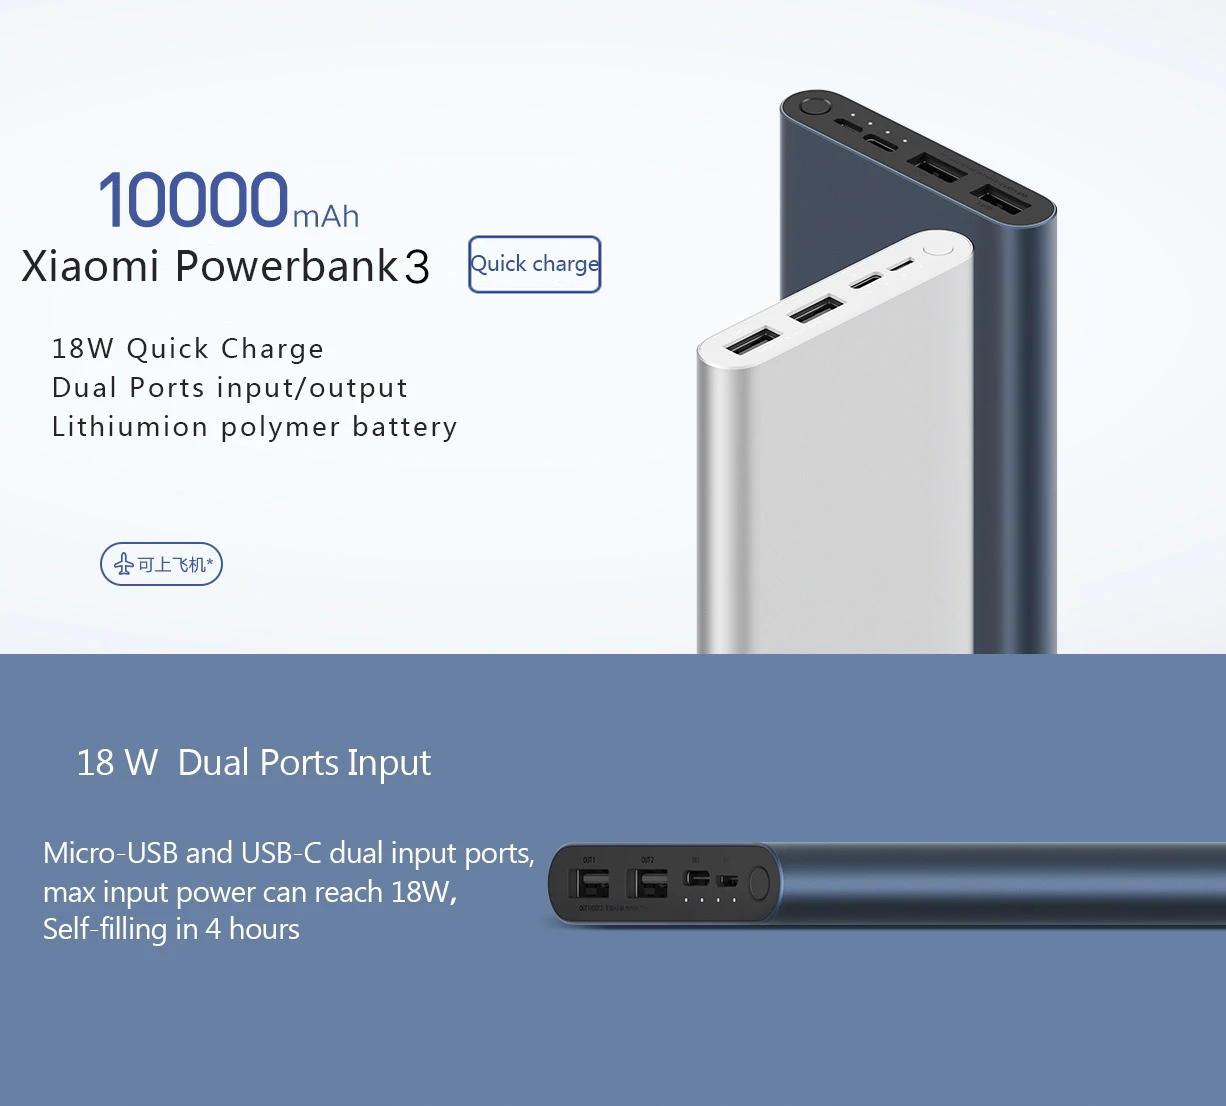 Xiaomi Power Bank 10000 2 Usb